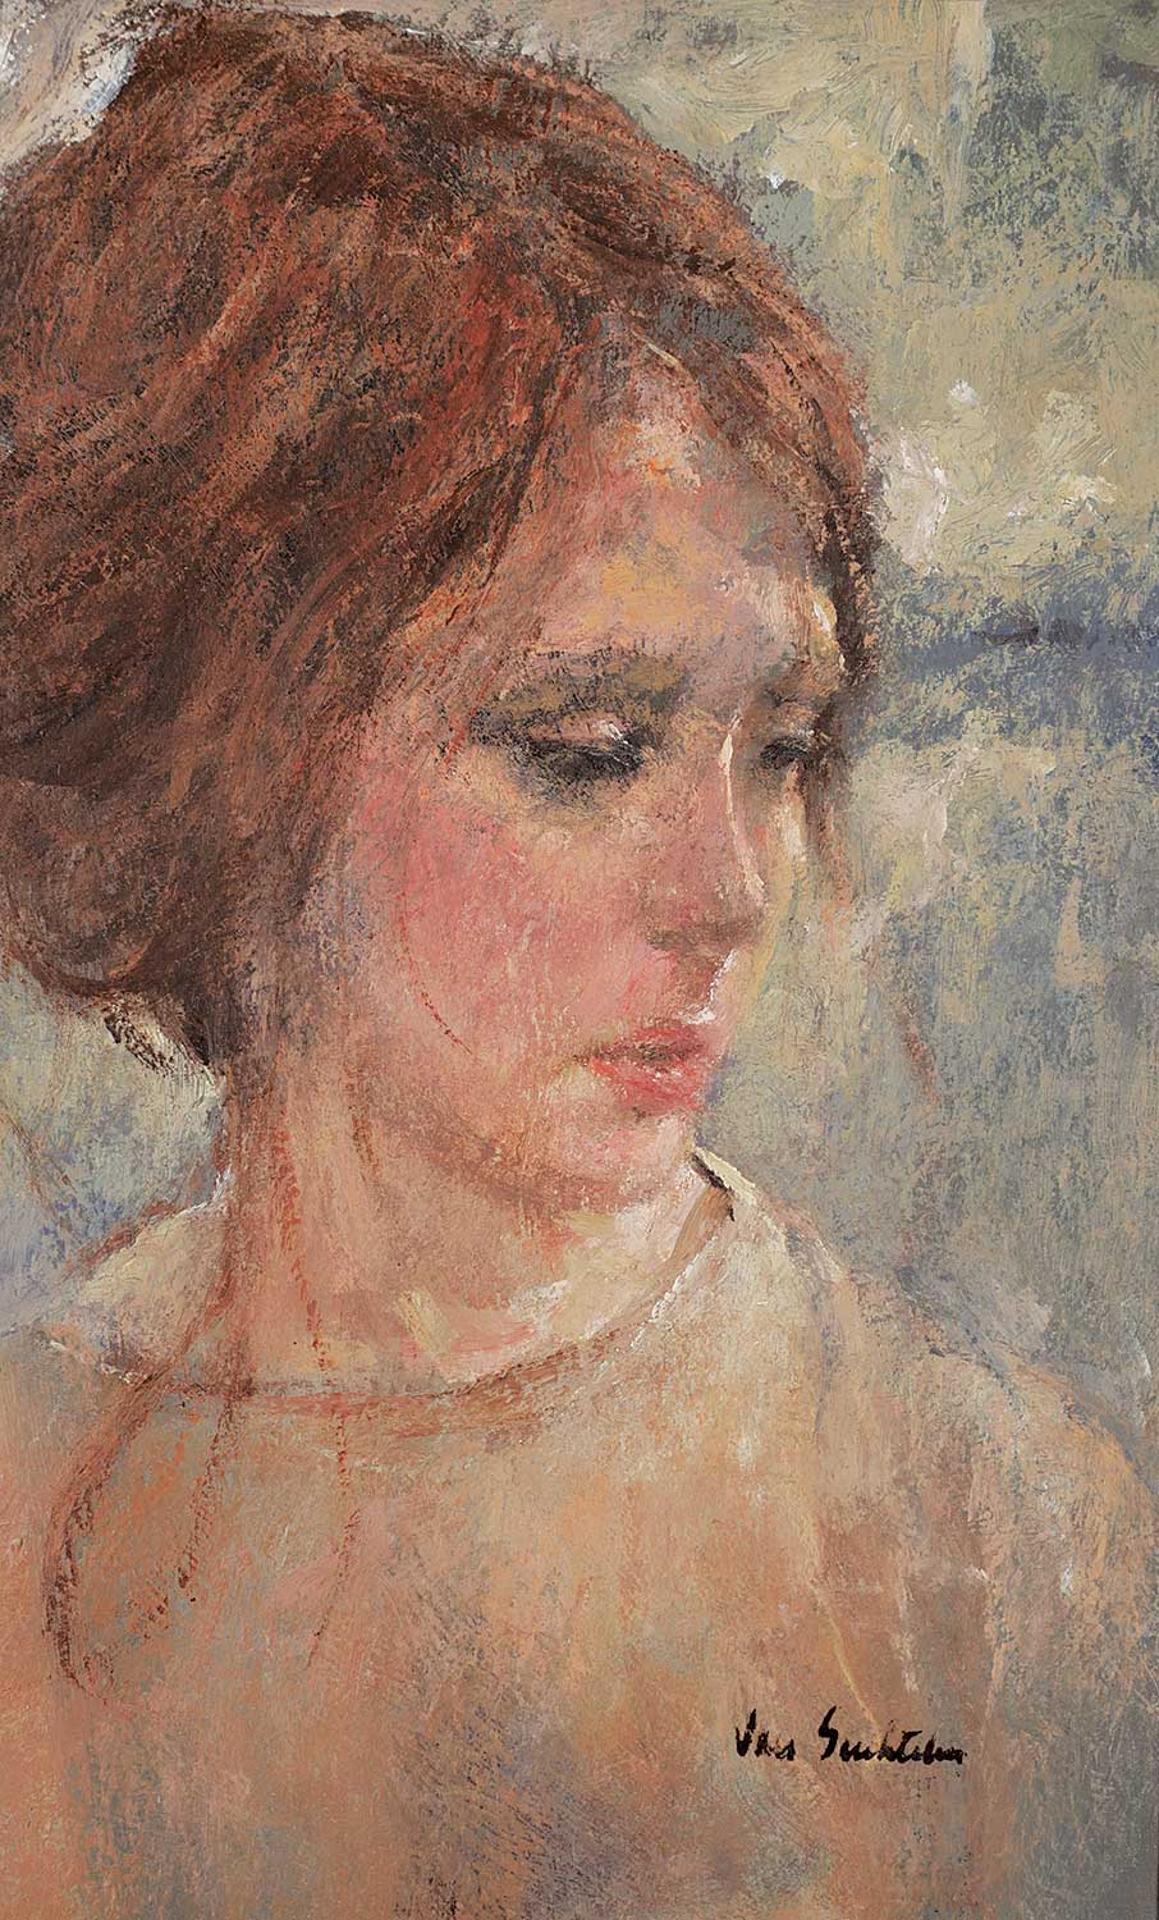 Con Van Suchtelen (1920) - Untitled - Portrait of a Girl